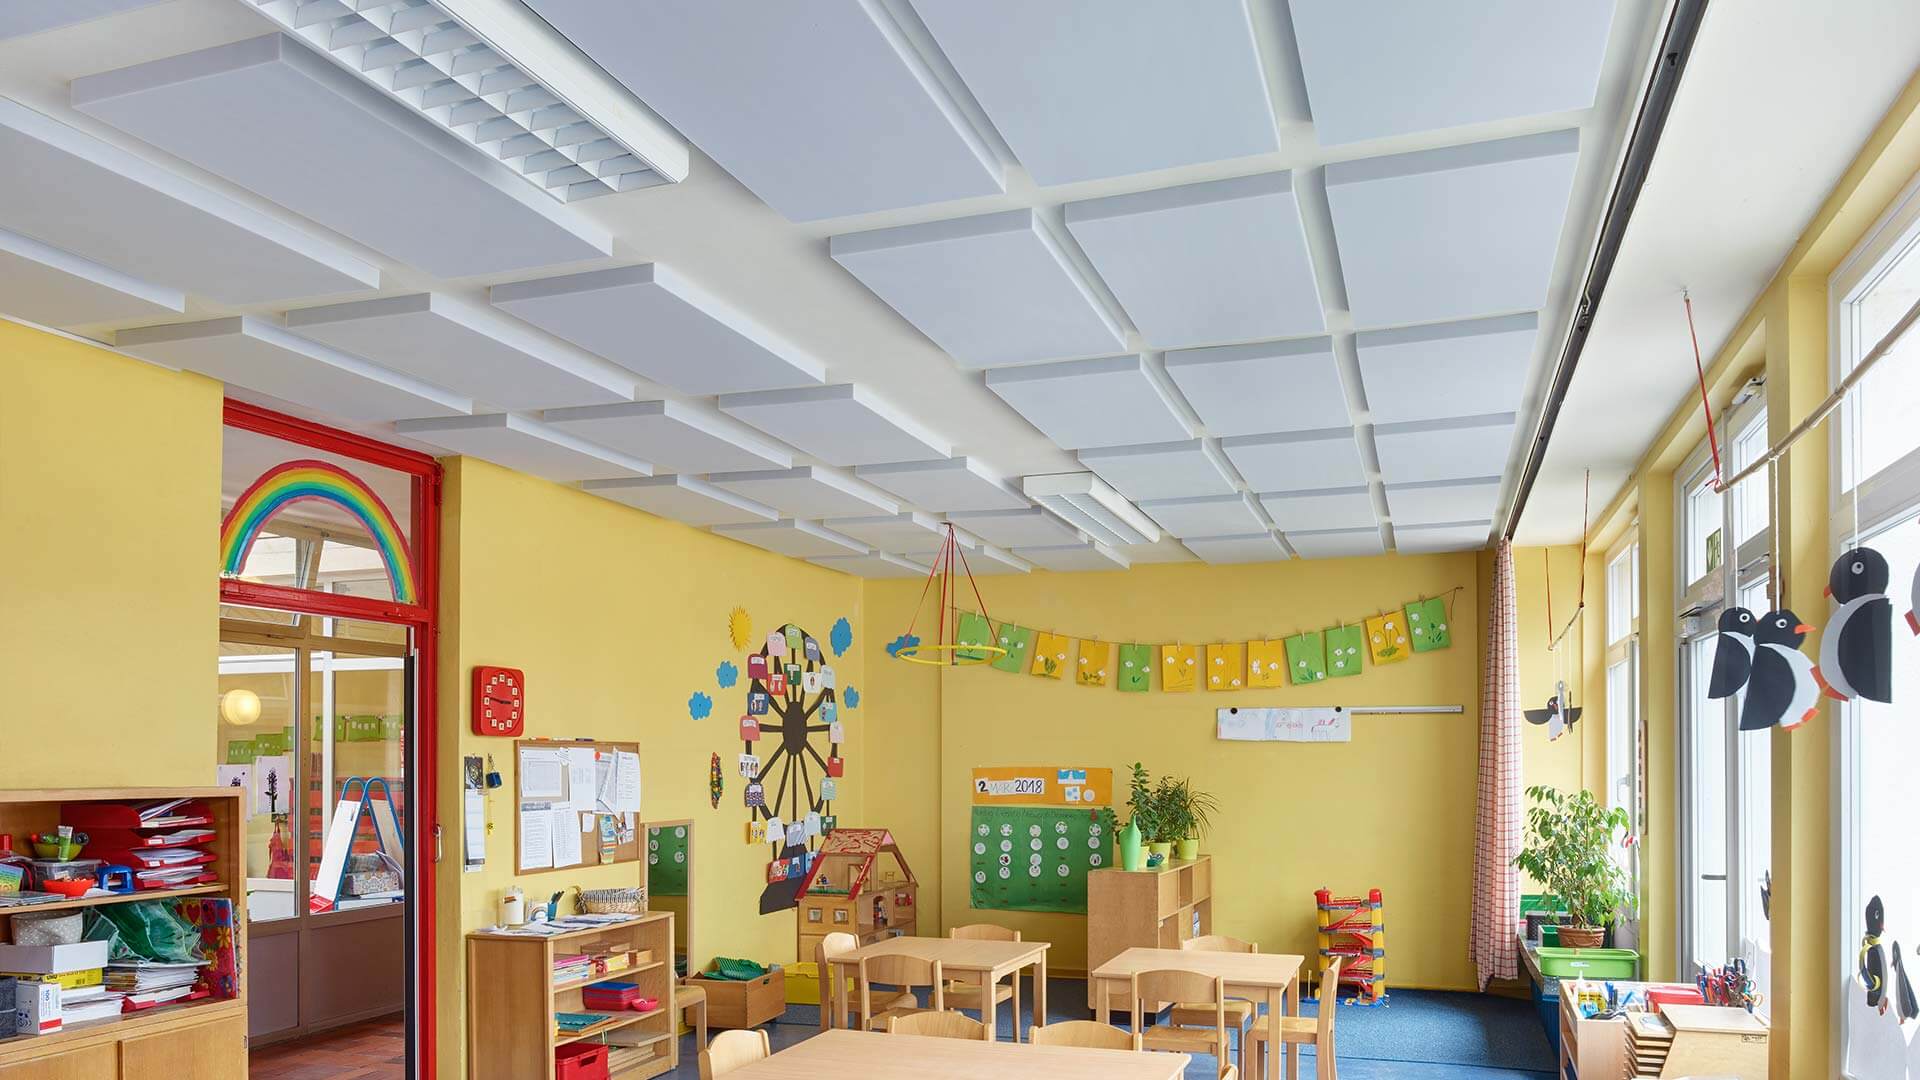 Pictures of the aixFOAM sound absorbers in kindergarten and school